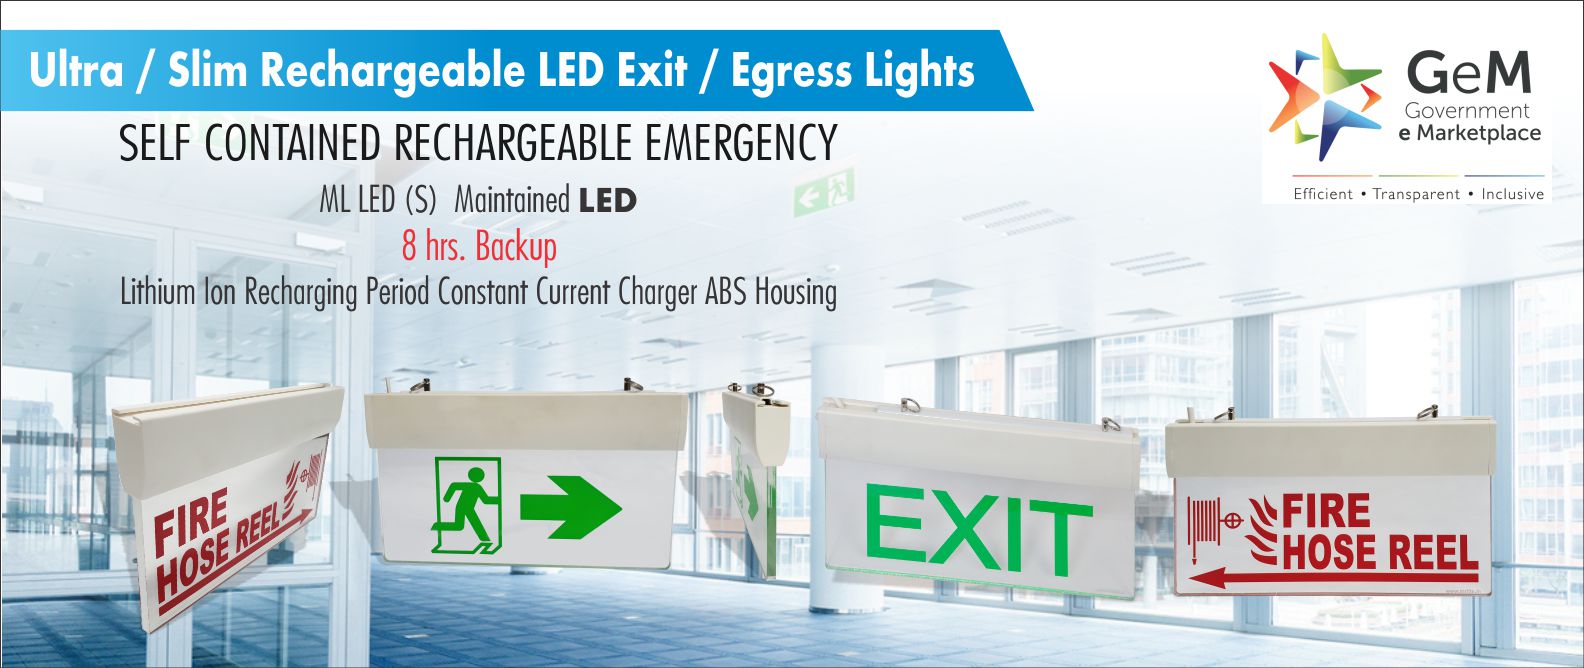 Web Poster LED Exit Signages